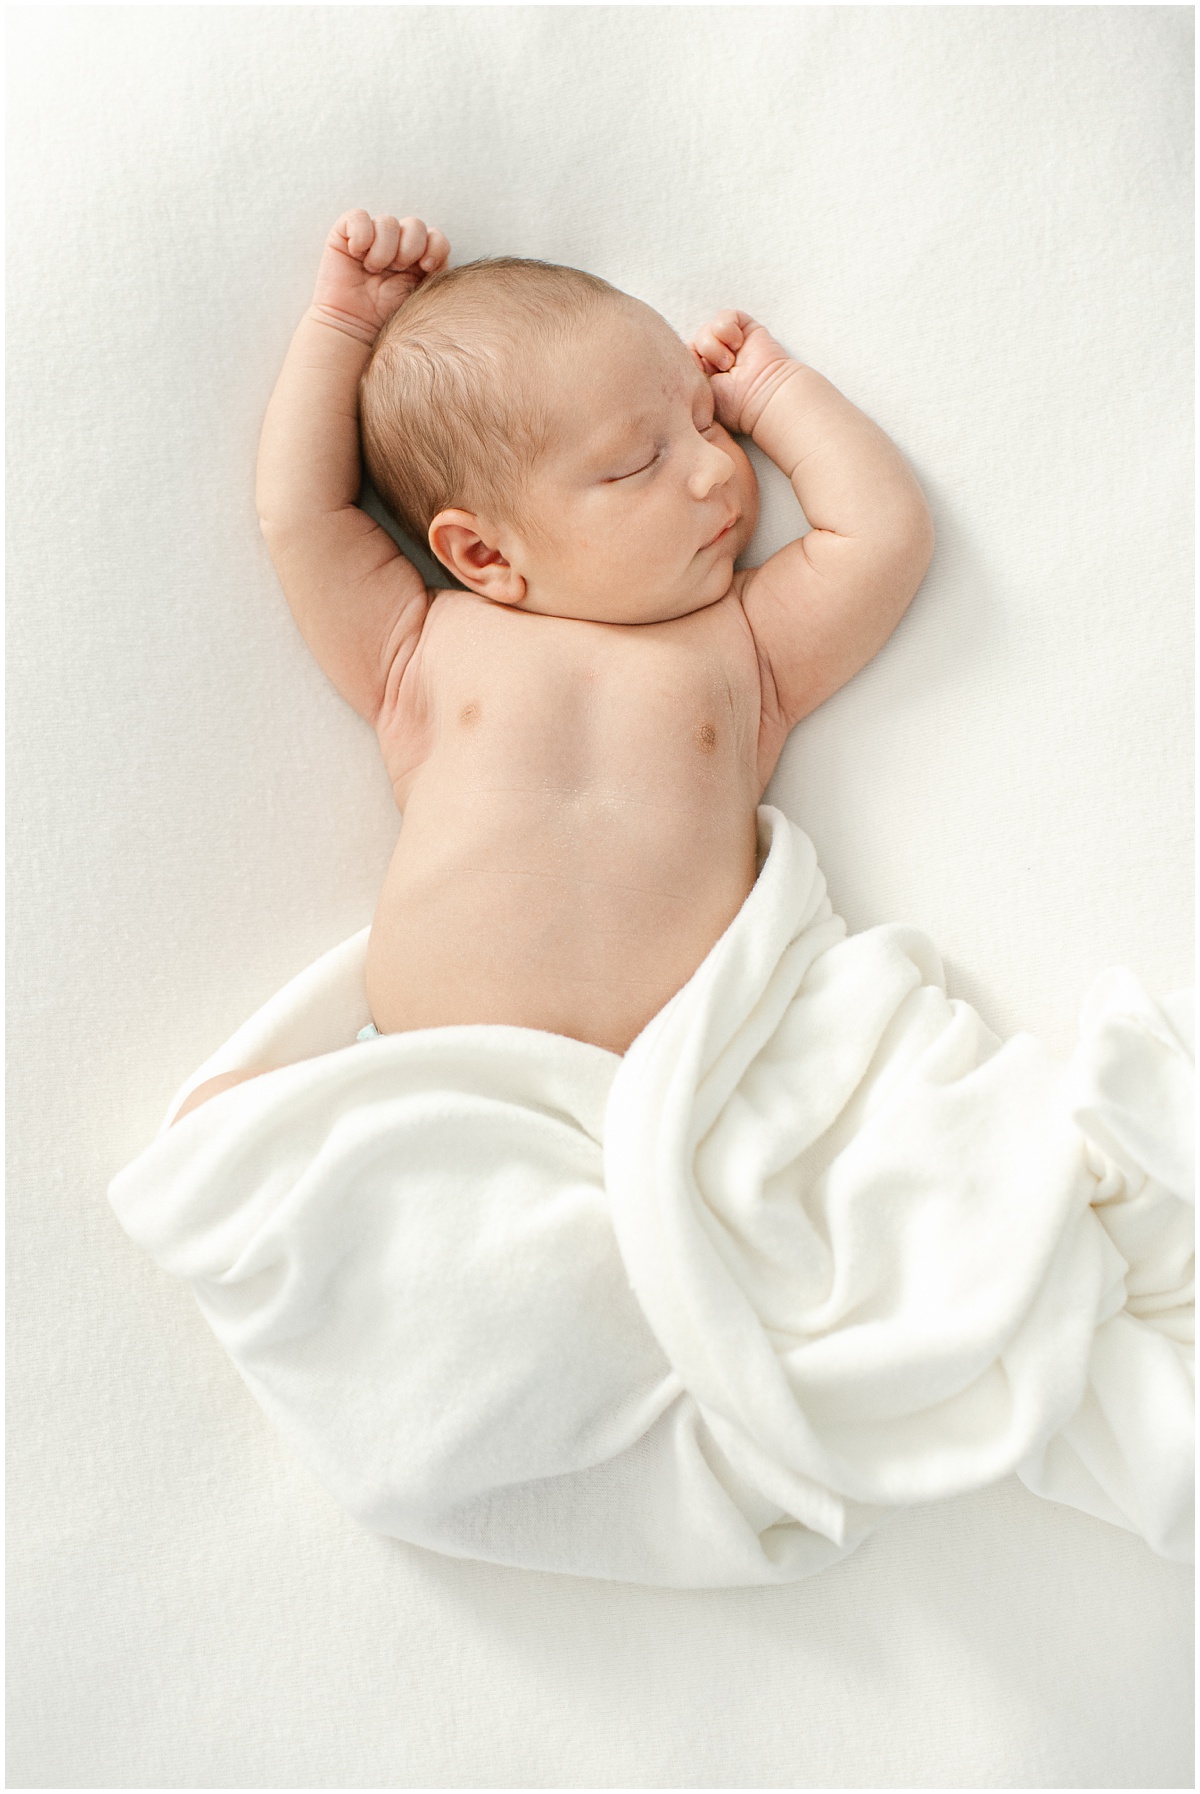 Greenville newborn photography